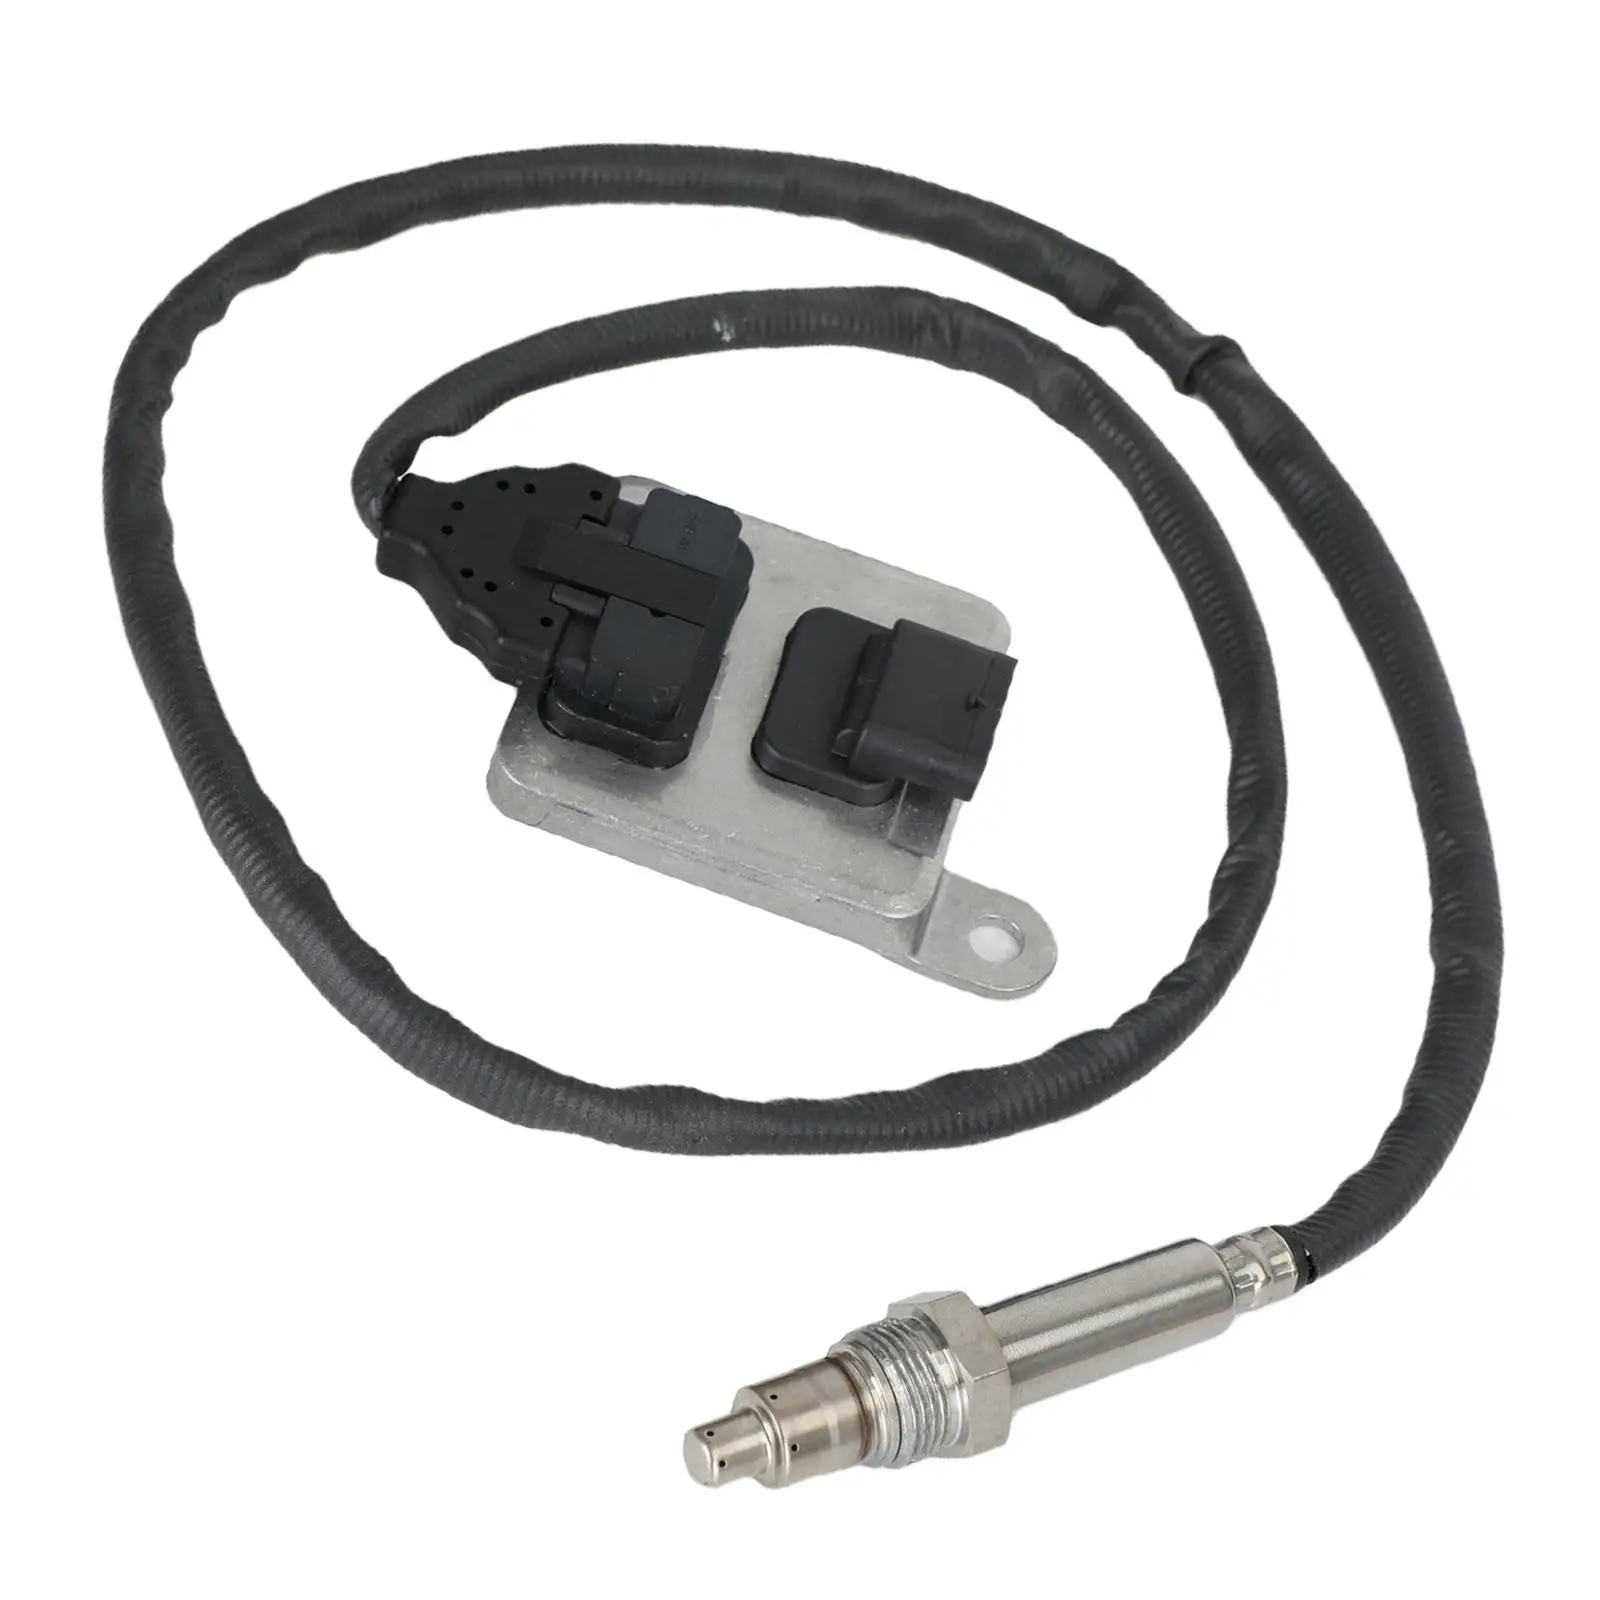 Nox Sensor Nitrogen Oxygen Sensor Replacement Fit for Isuzu 89823-13911